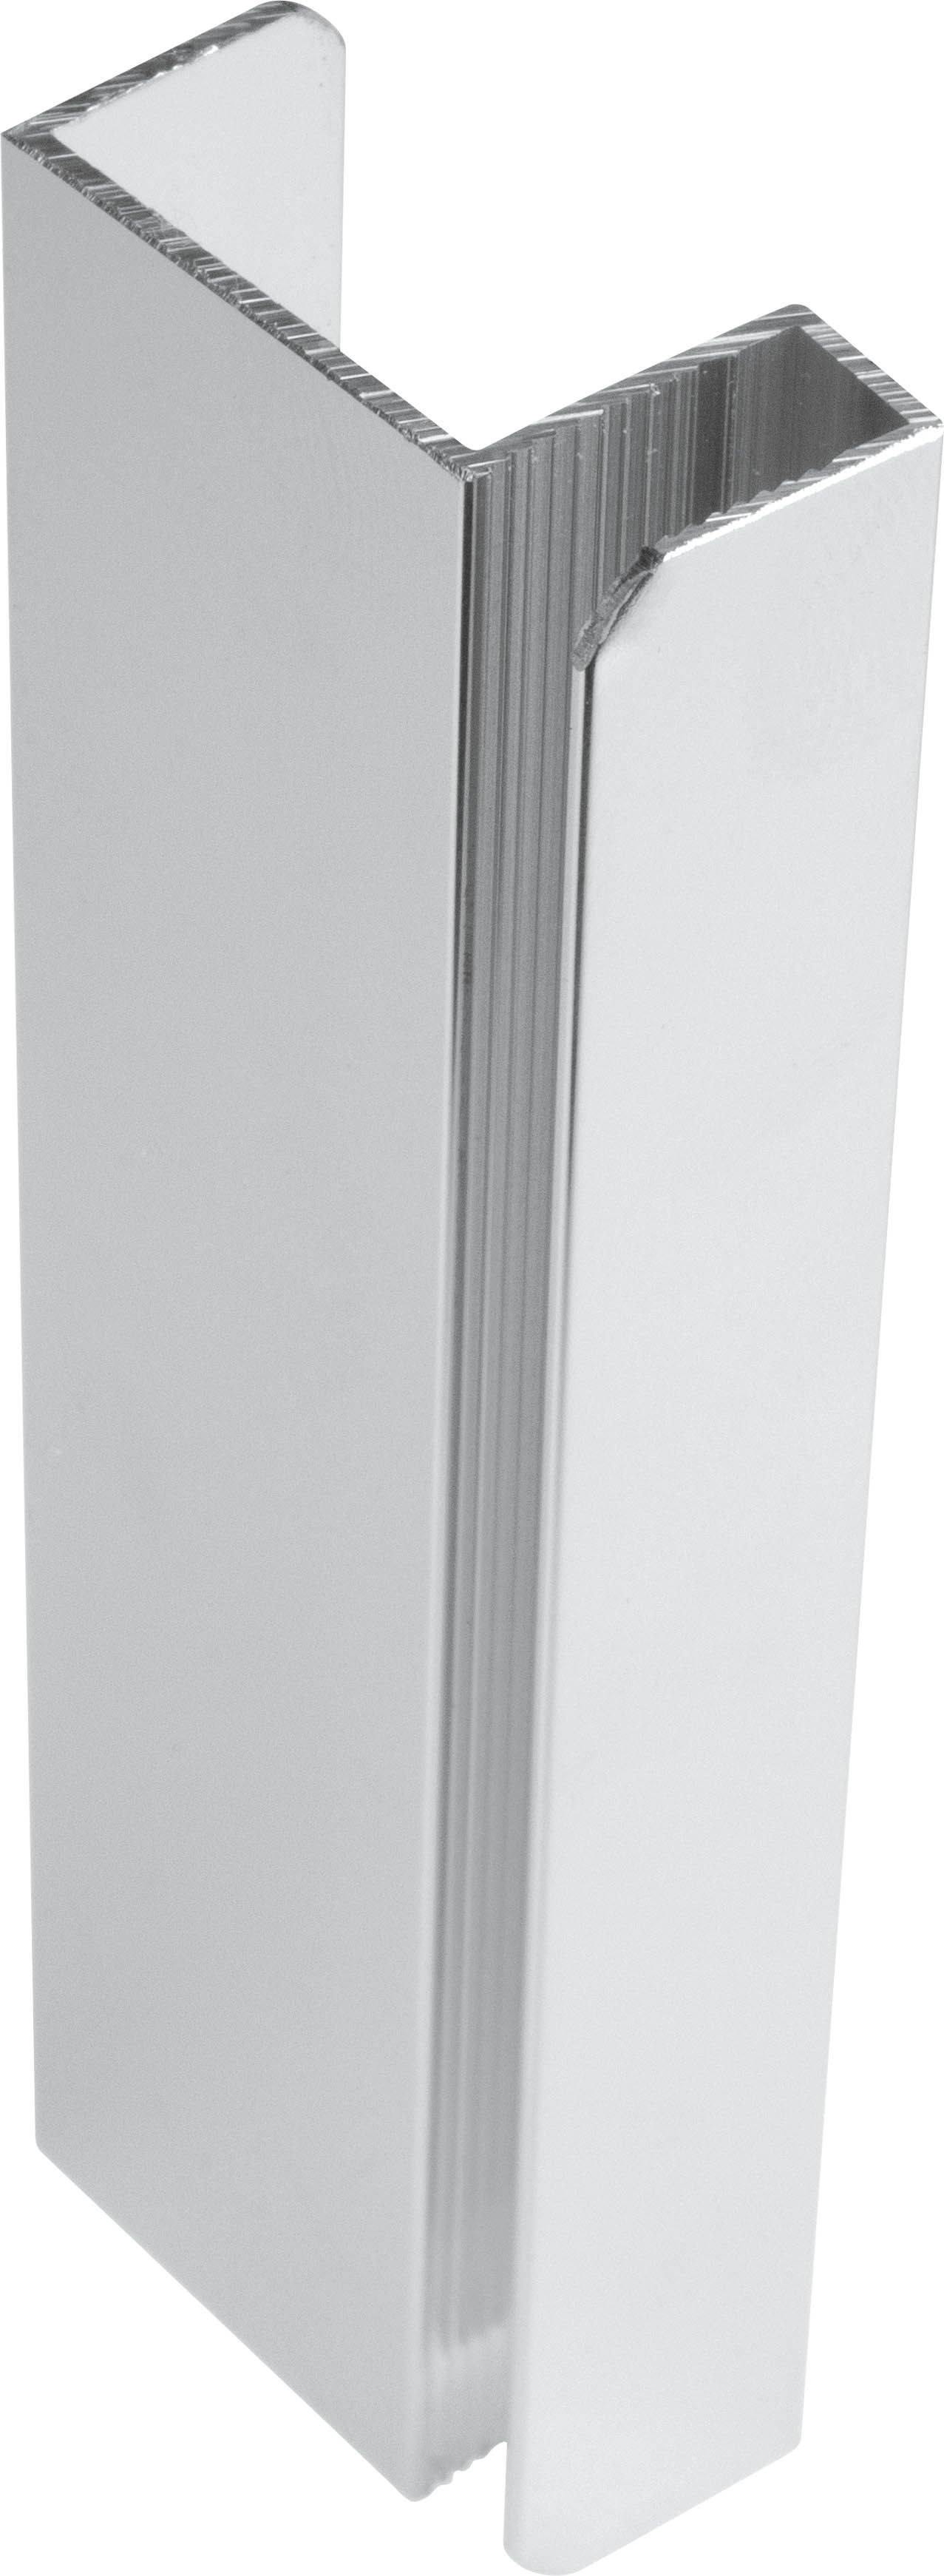 Maniglia della porta della doccia, Sistema Kerria Plus - KTSX010X - Główne zdjęcie produktowe